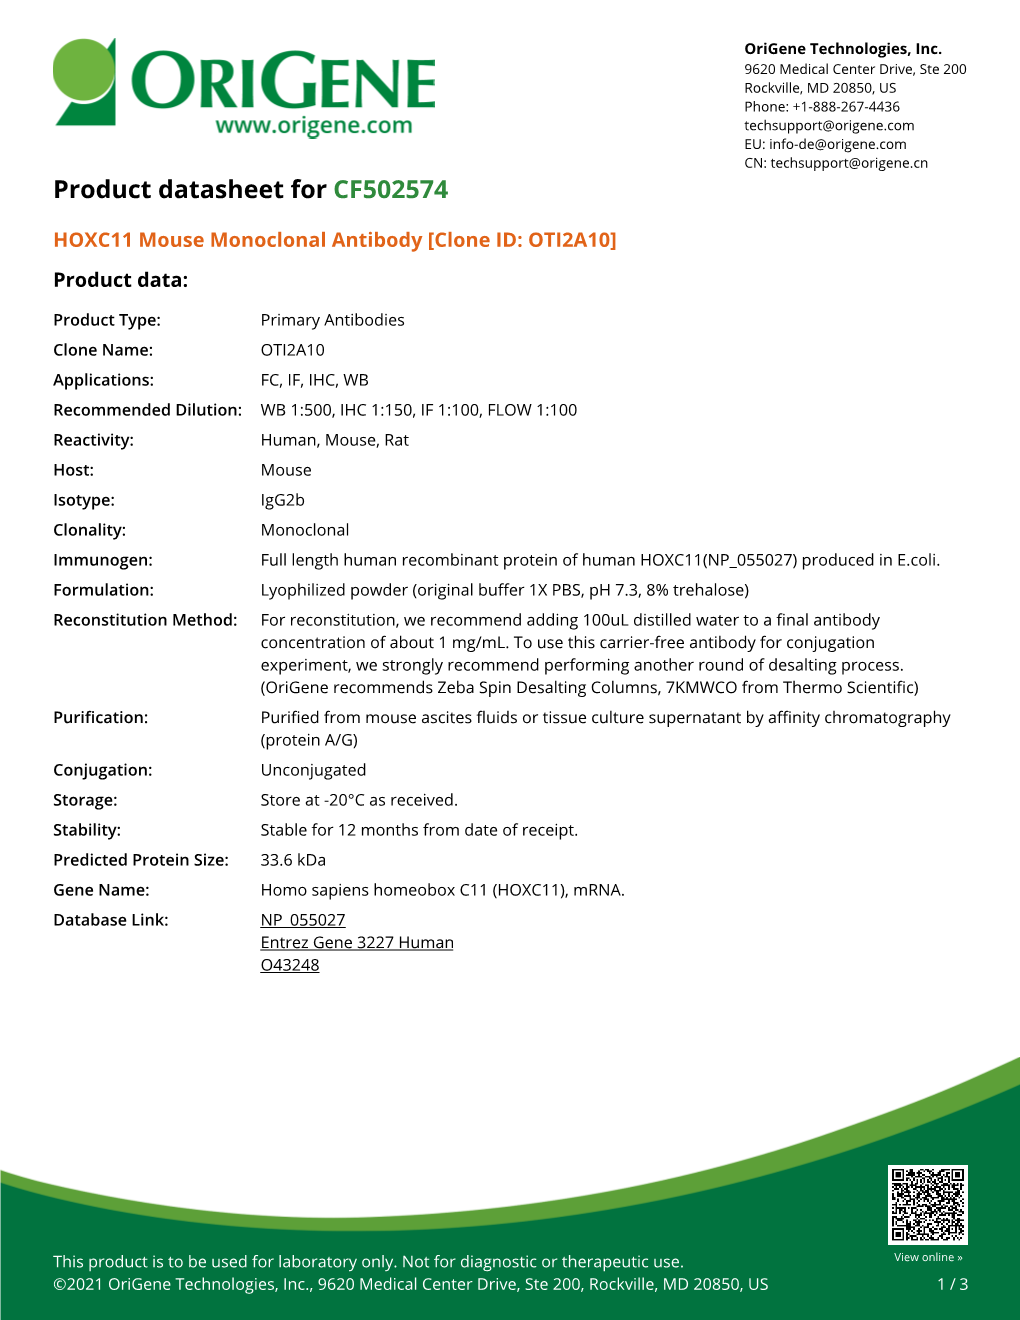 HOXC11 Mouse Monoclonal Antibody [Clone ID: OTI2A10] Product Data